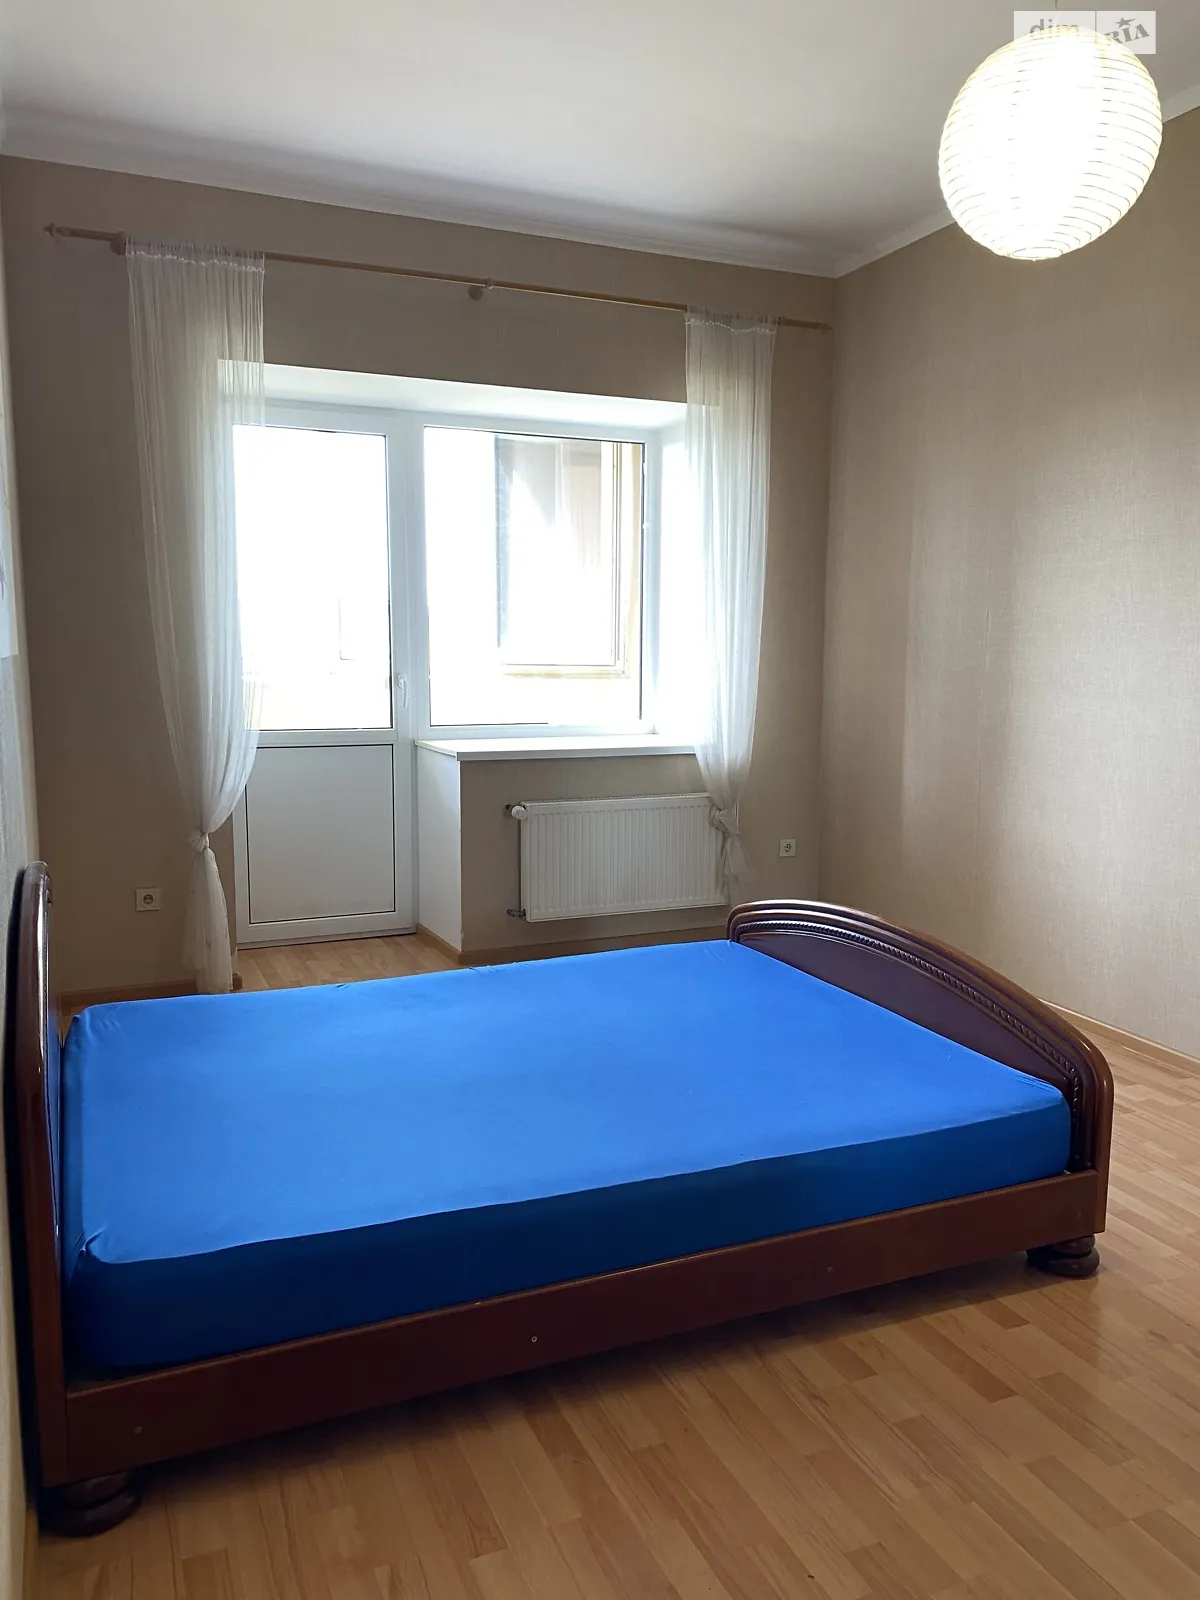 Сдается в аренду 2-комнатная квартира 60 кв. м в Ровно - фото 2